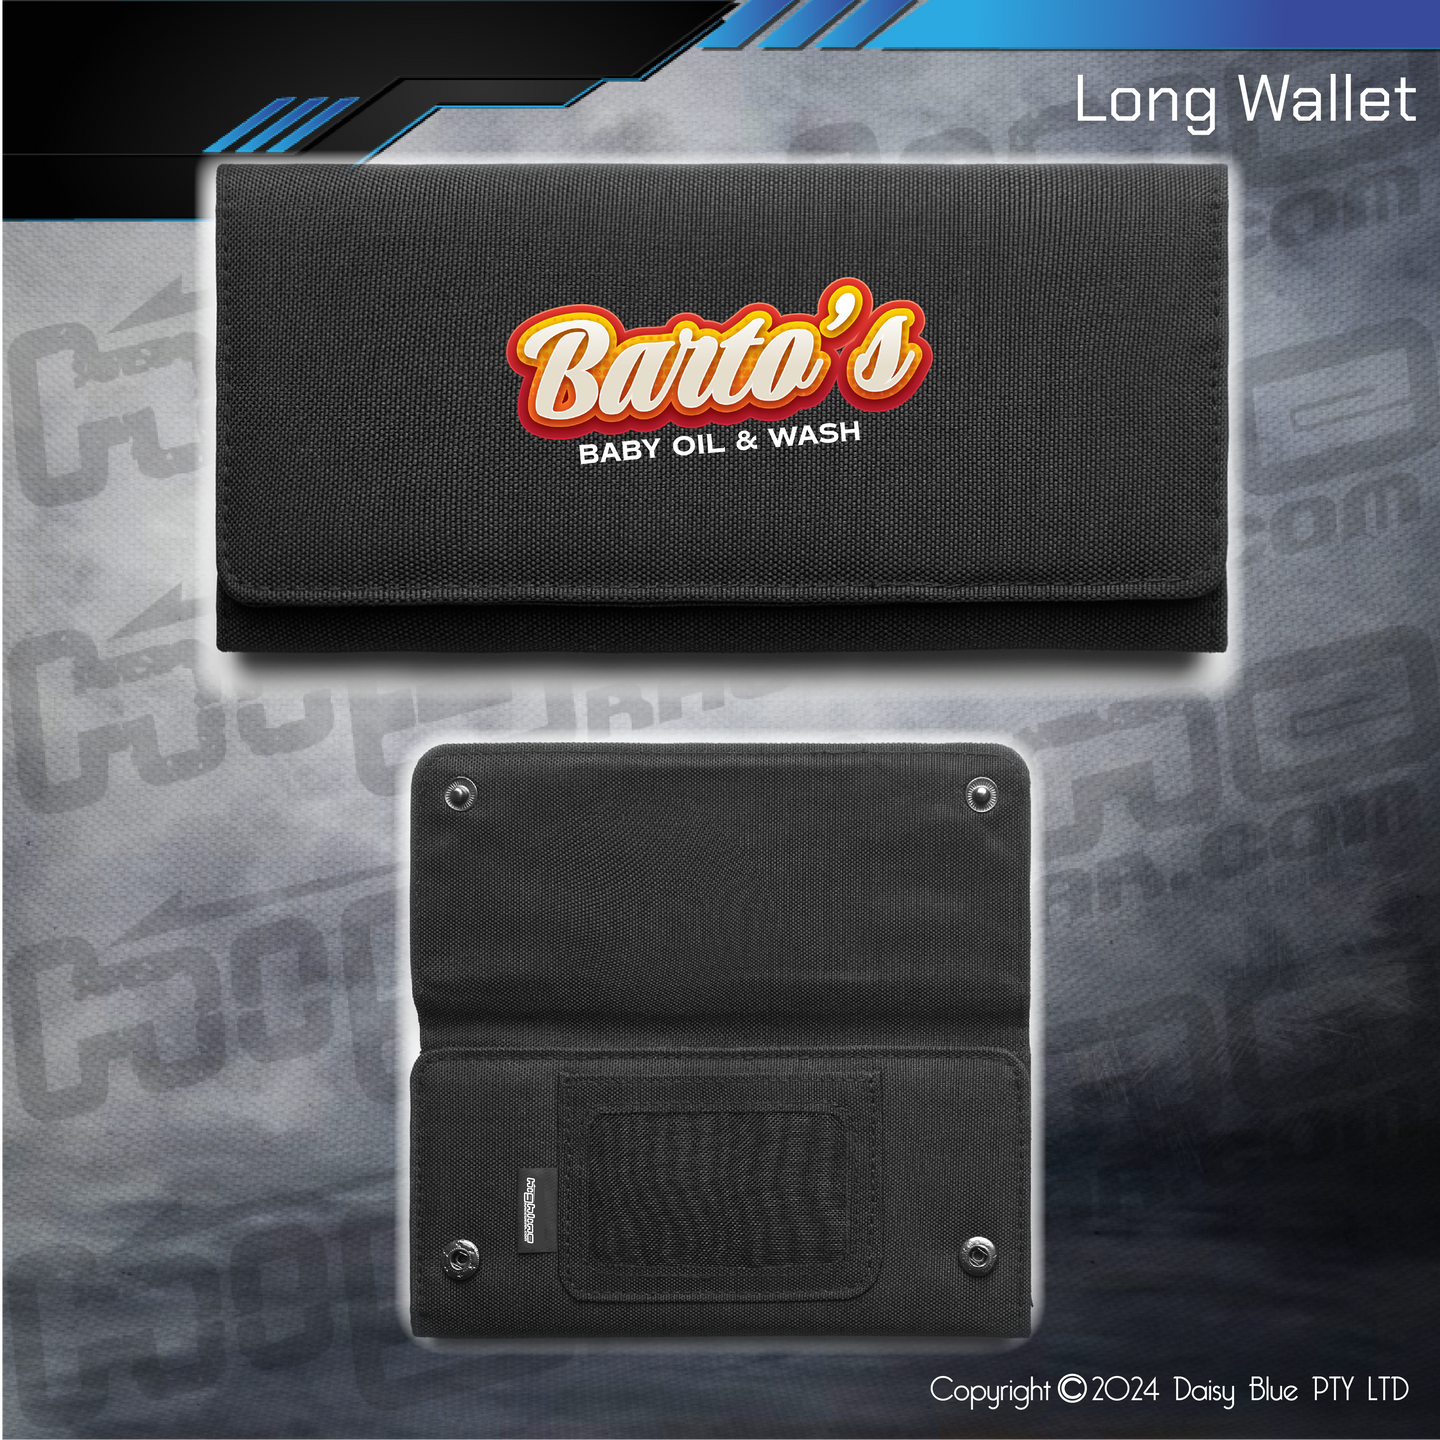 Long Wallet - Barto